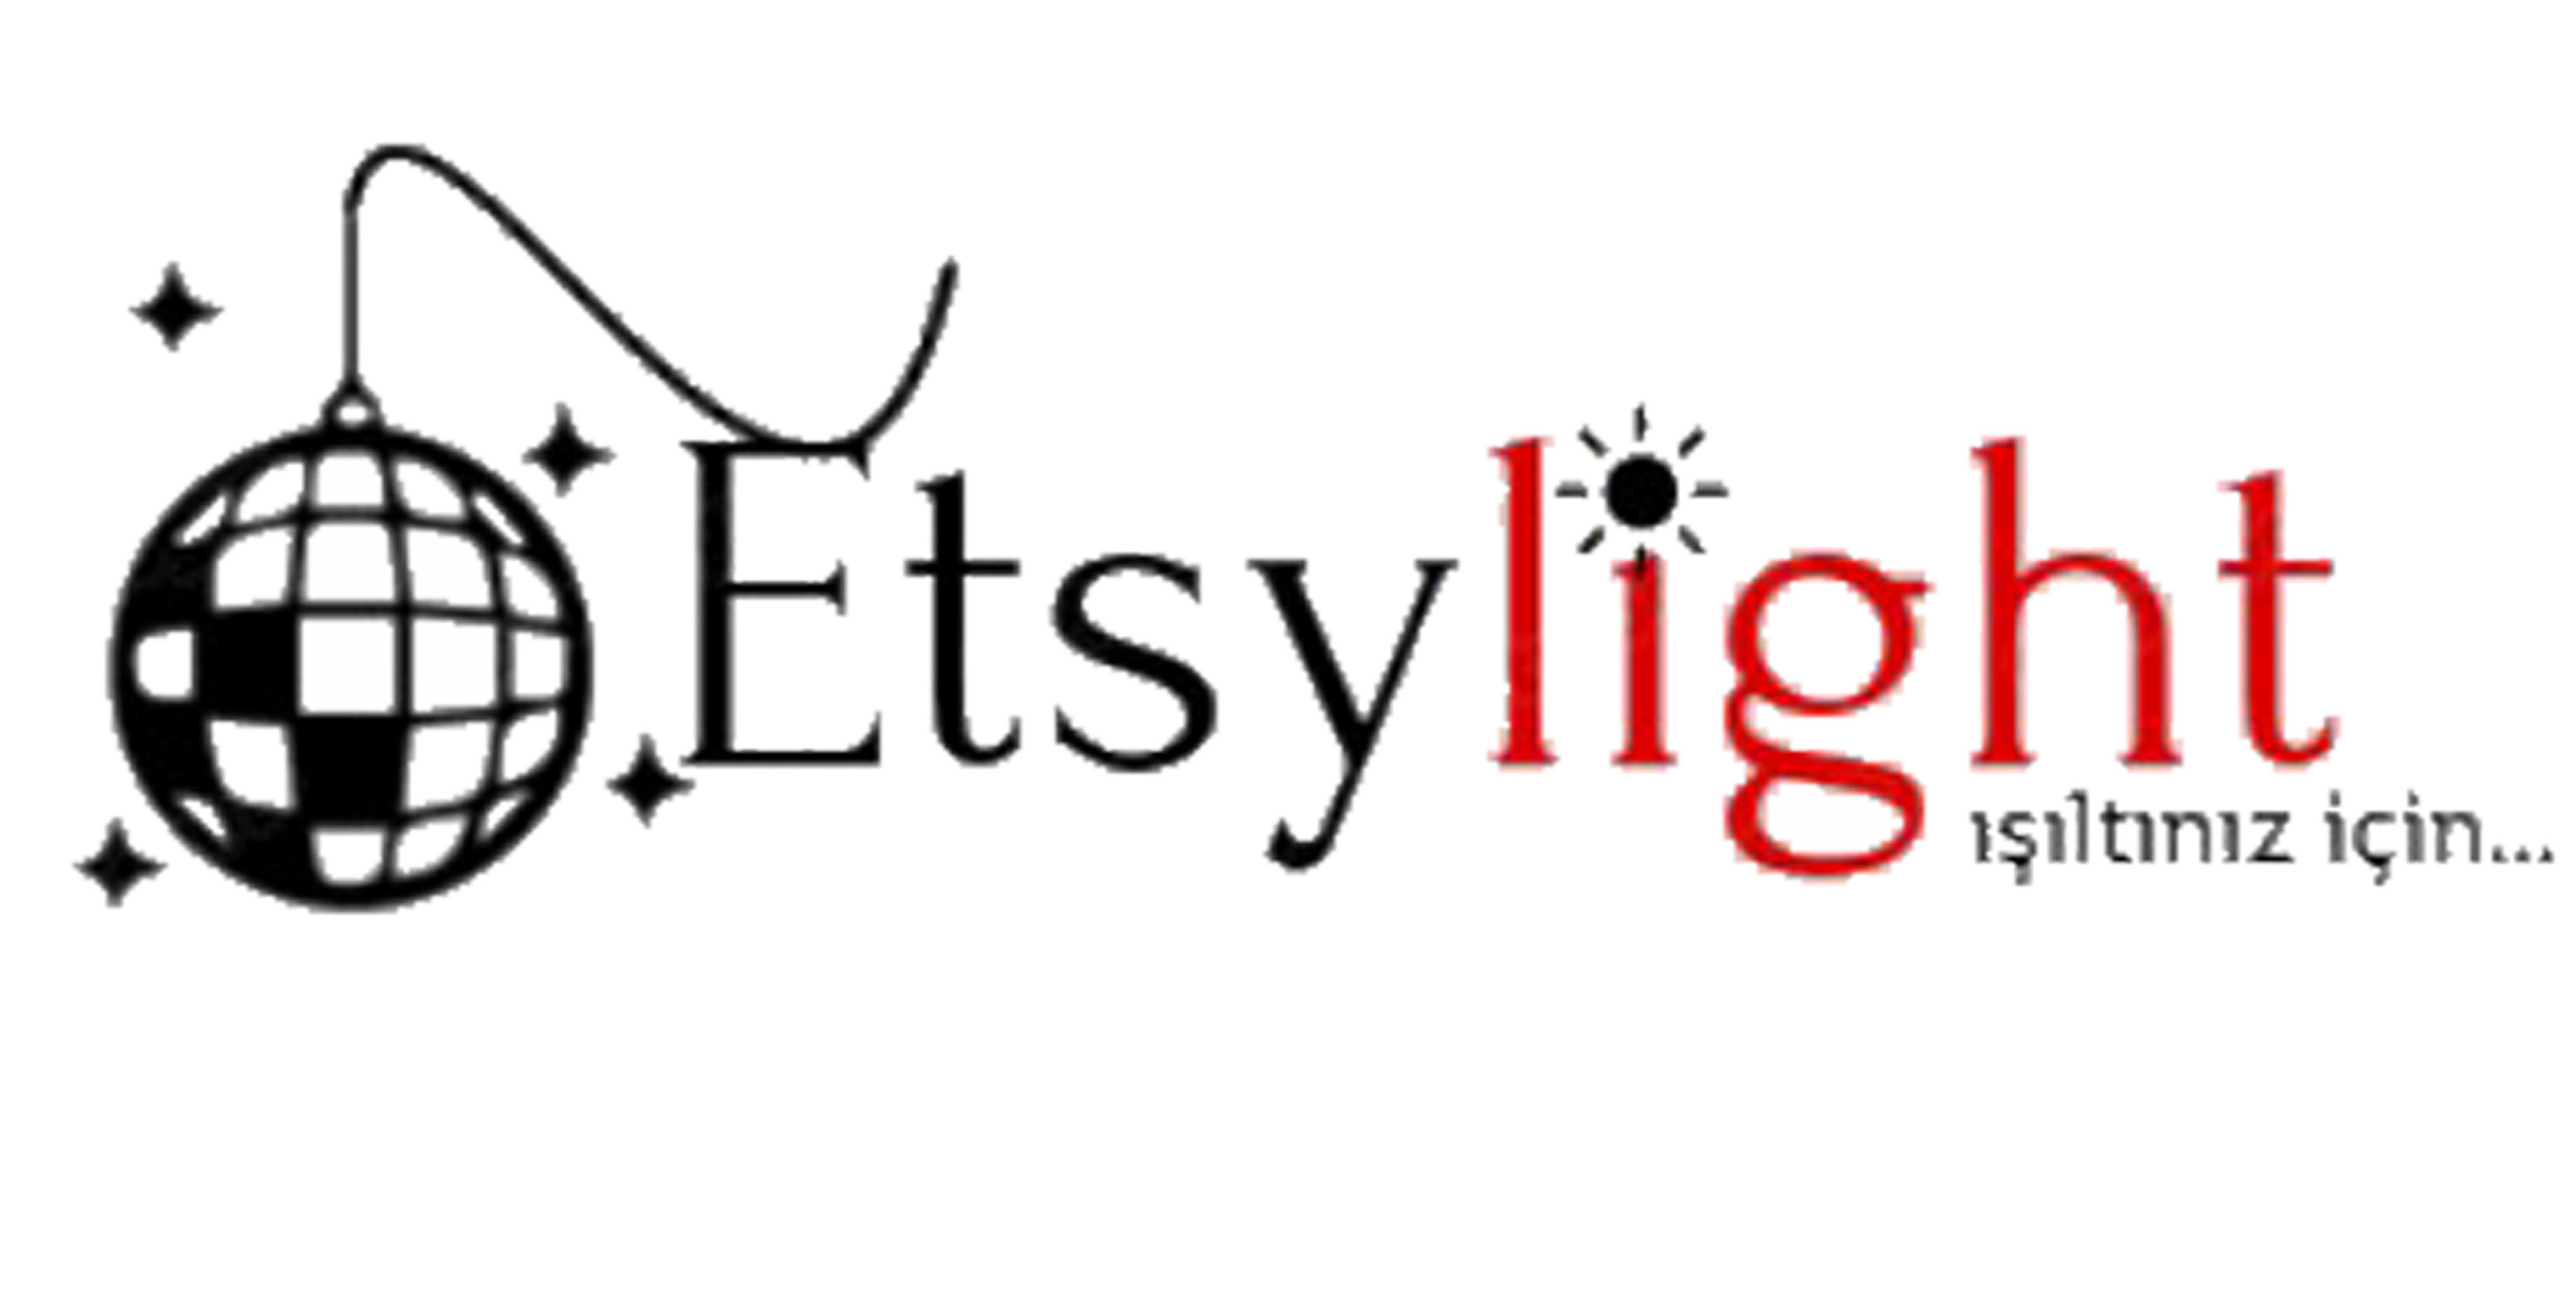 Etsylight